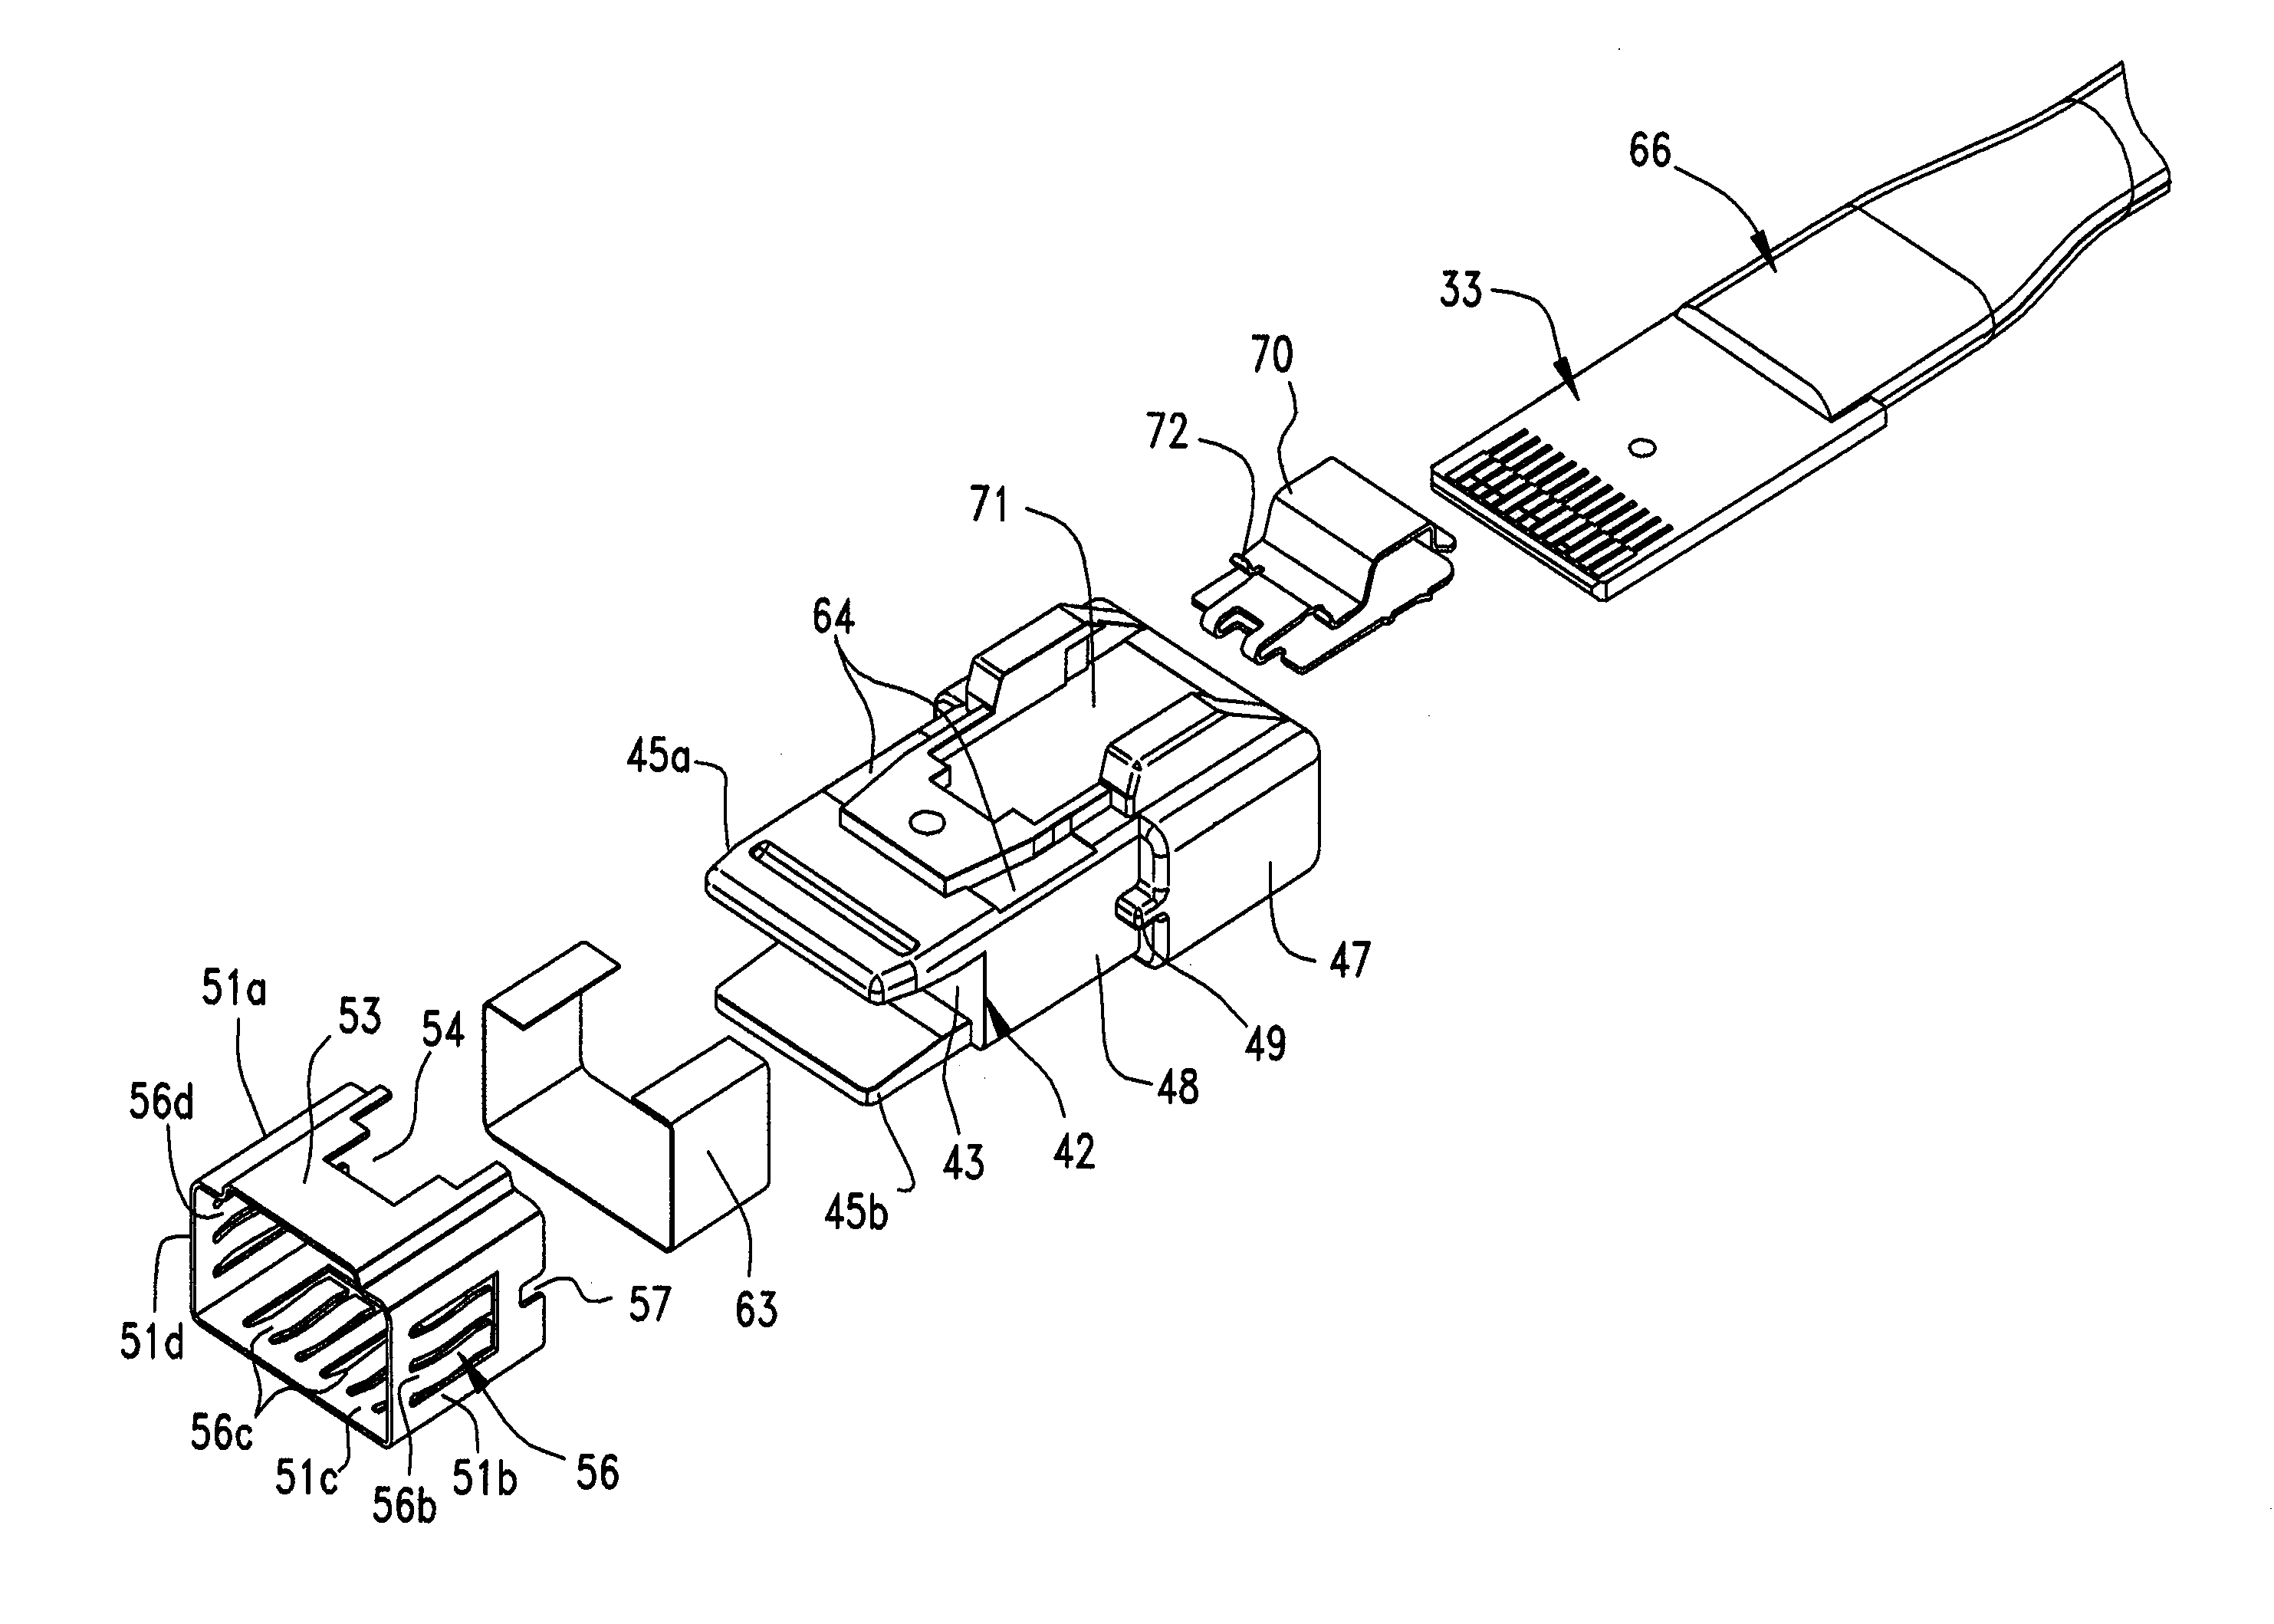 Plug connector with external EMI shielding capability